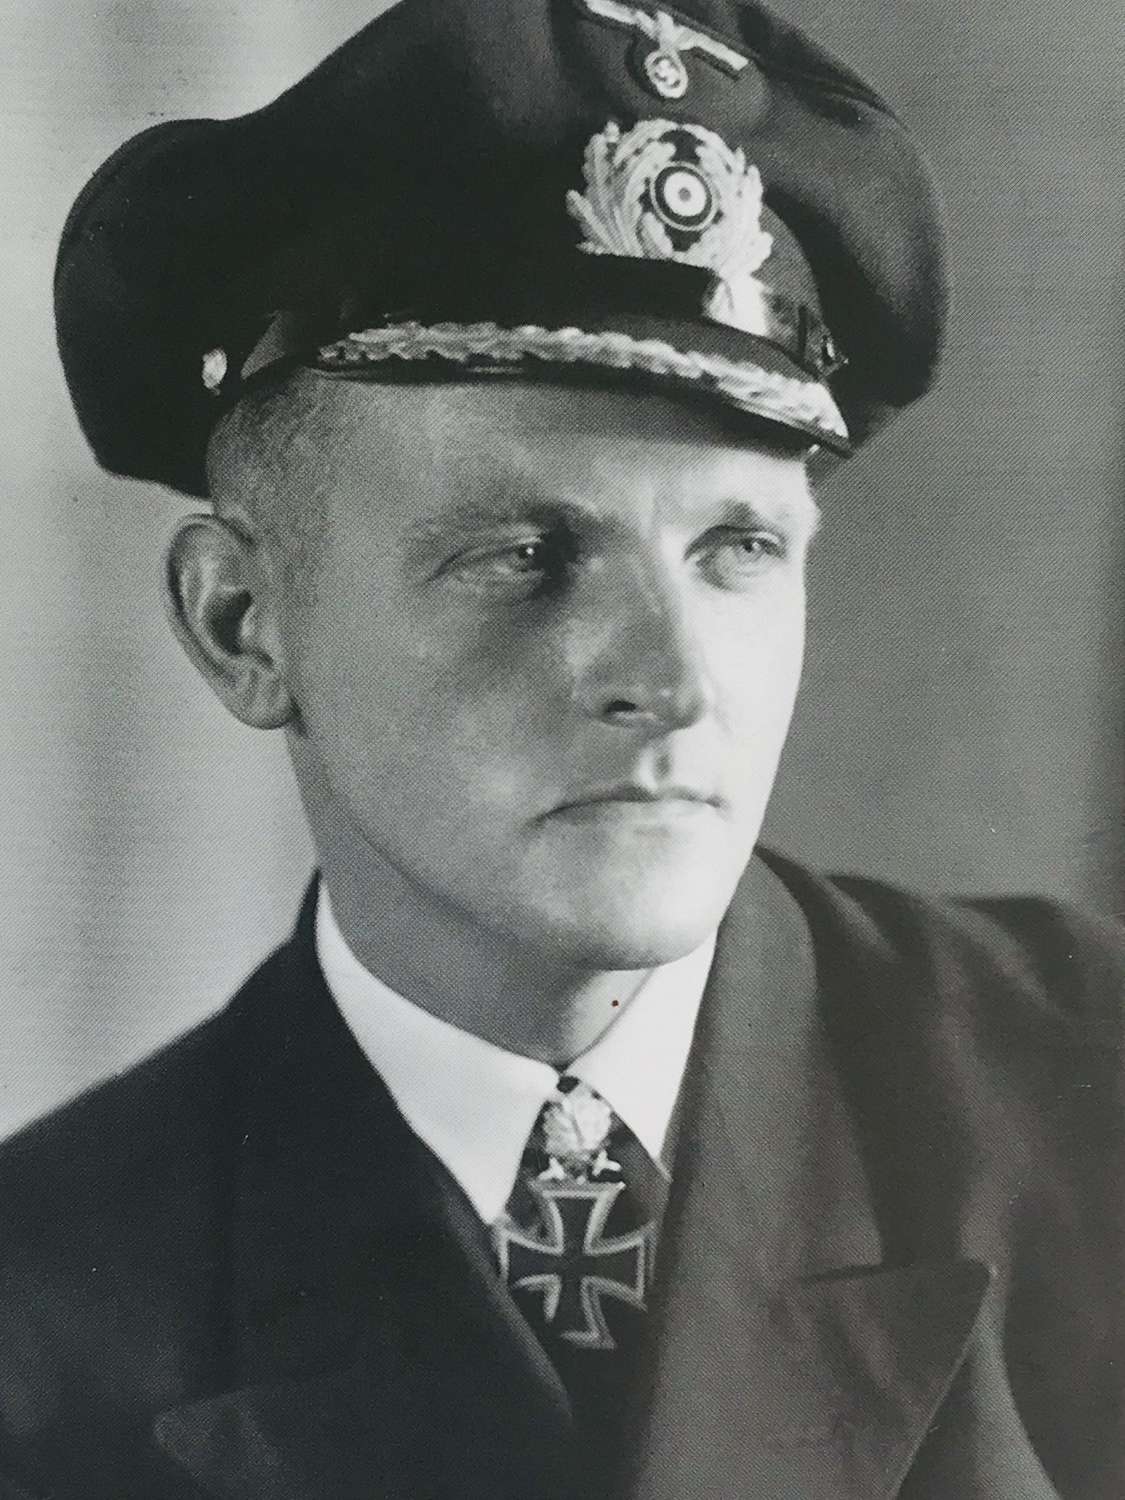 Autographed Photograph of Erich Topp u-boat commander